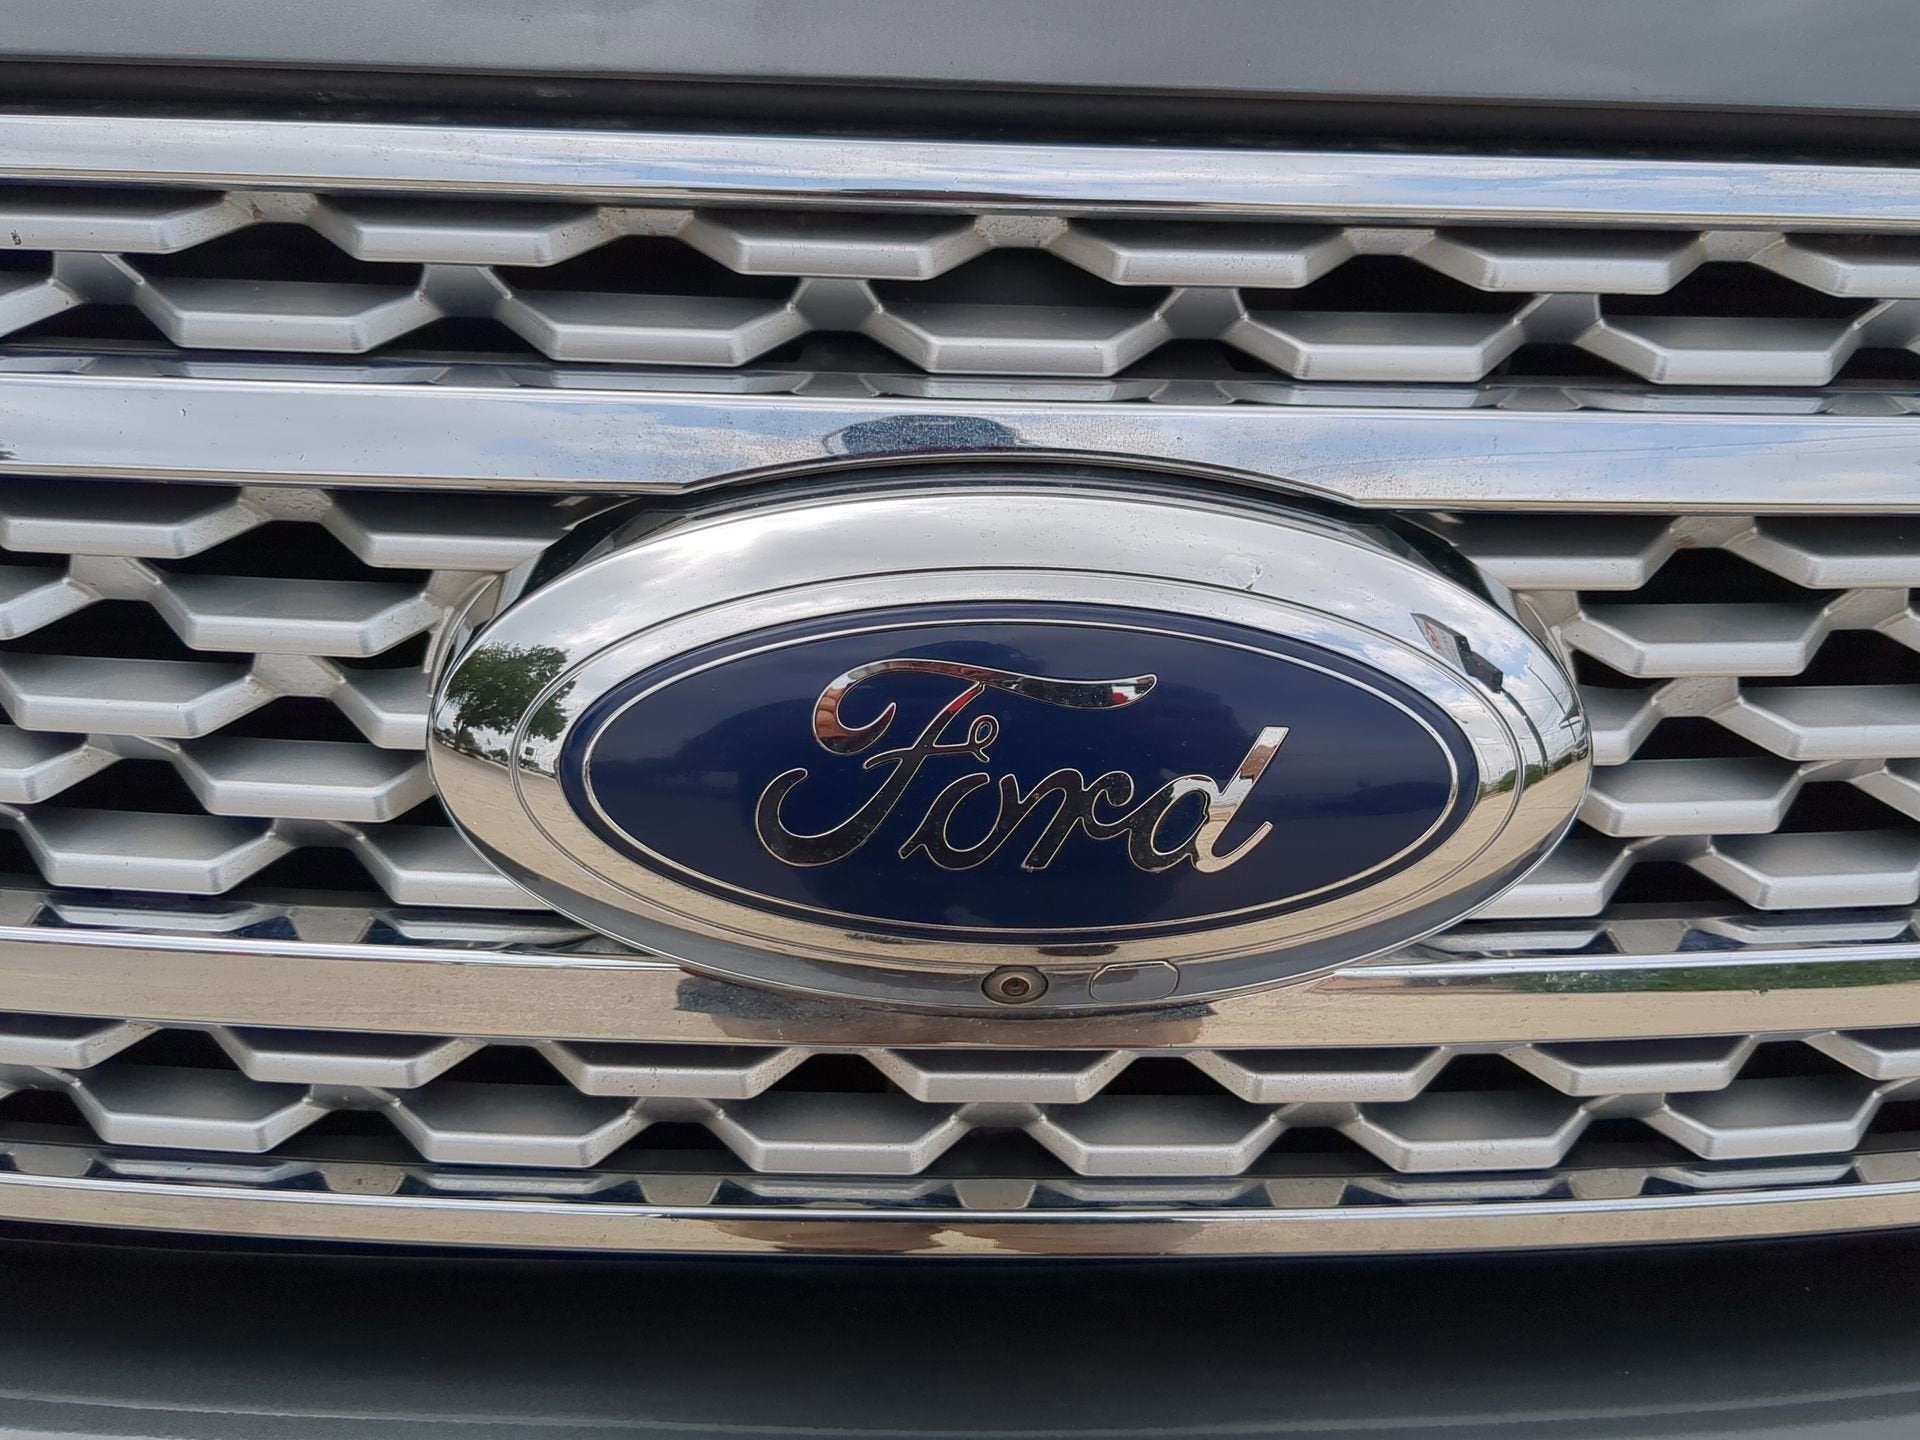 2018 Ford Expedition Platinum